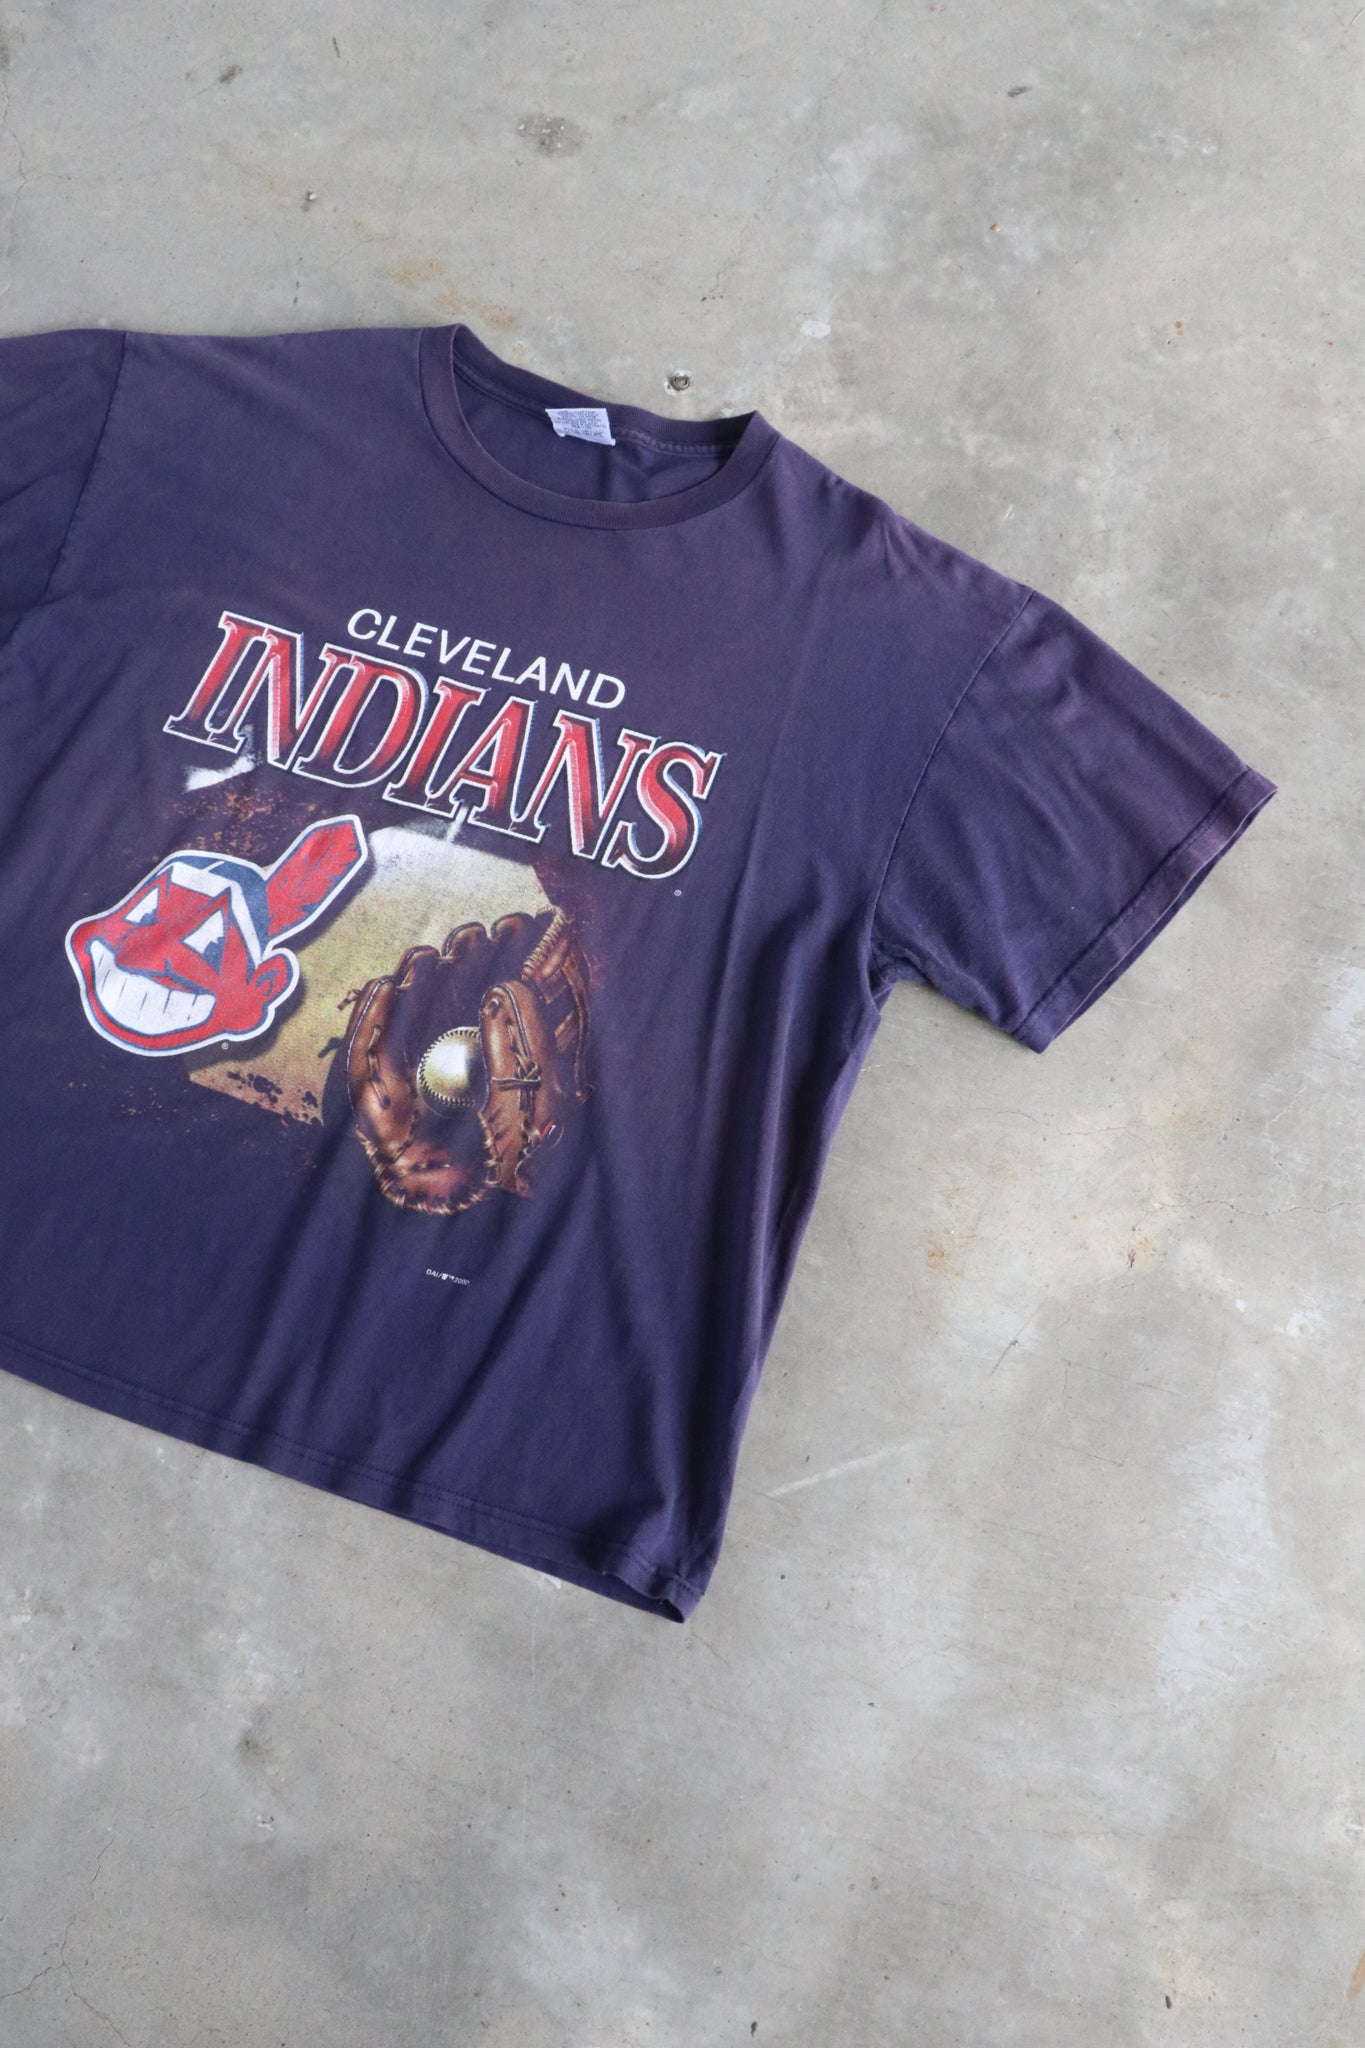 Vintage MLB Cleveland Indians Tee XL